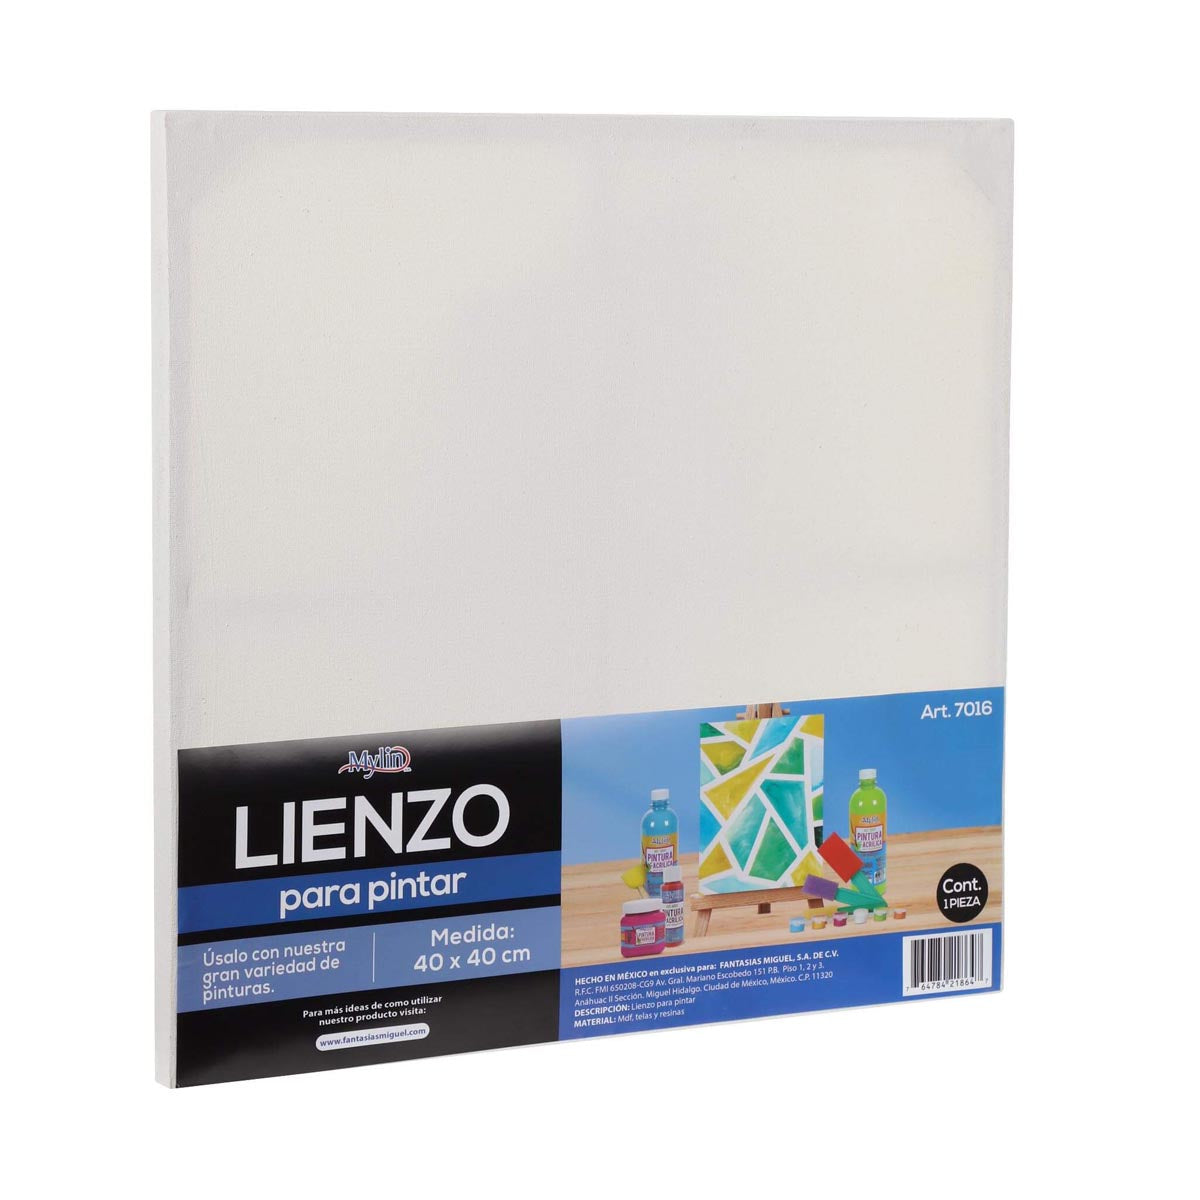 Art.7016 Lienzo Para Pintar 40x40x2cm 1pz